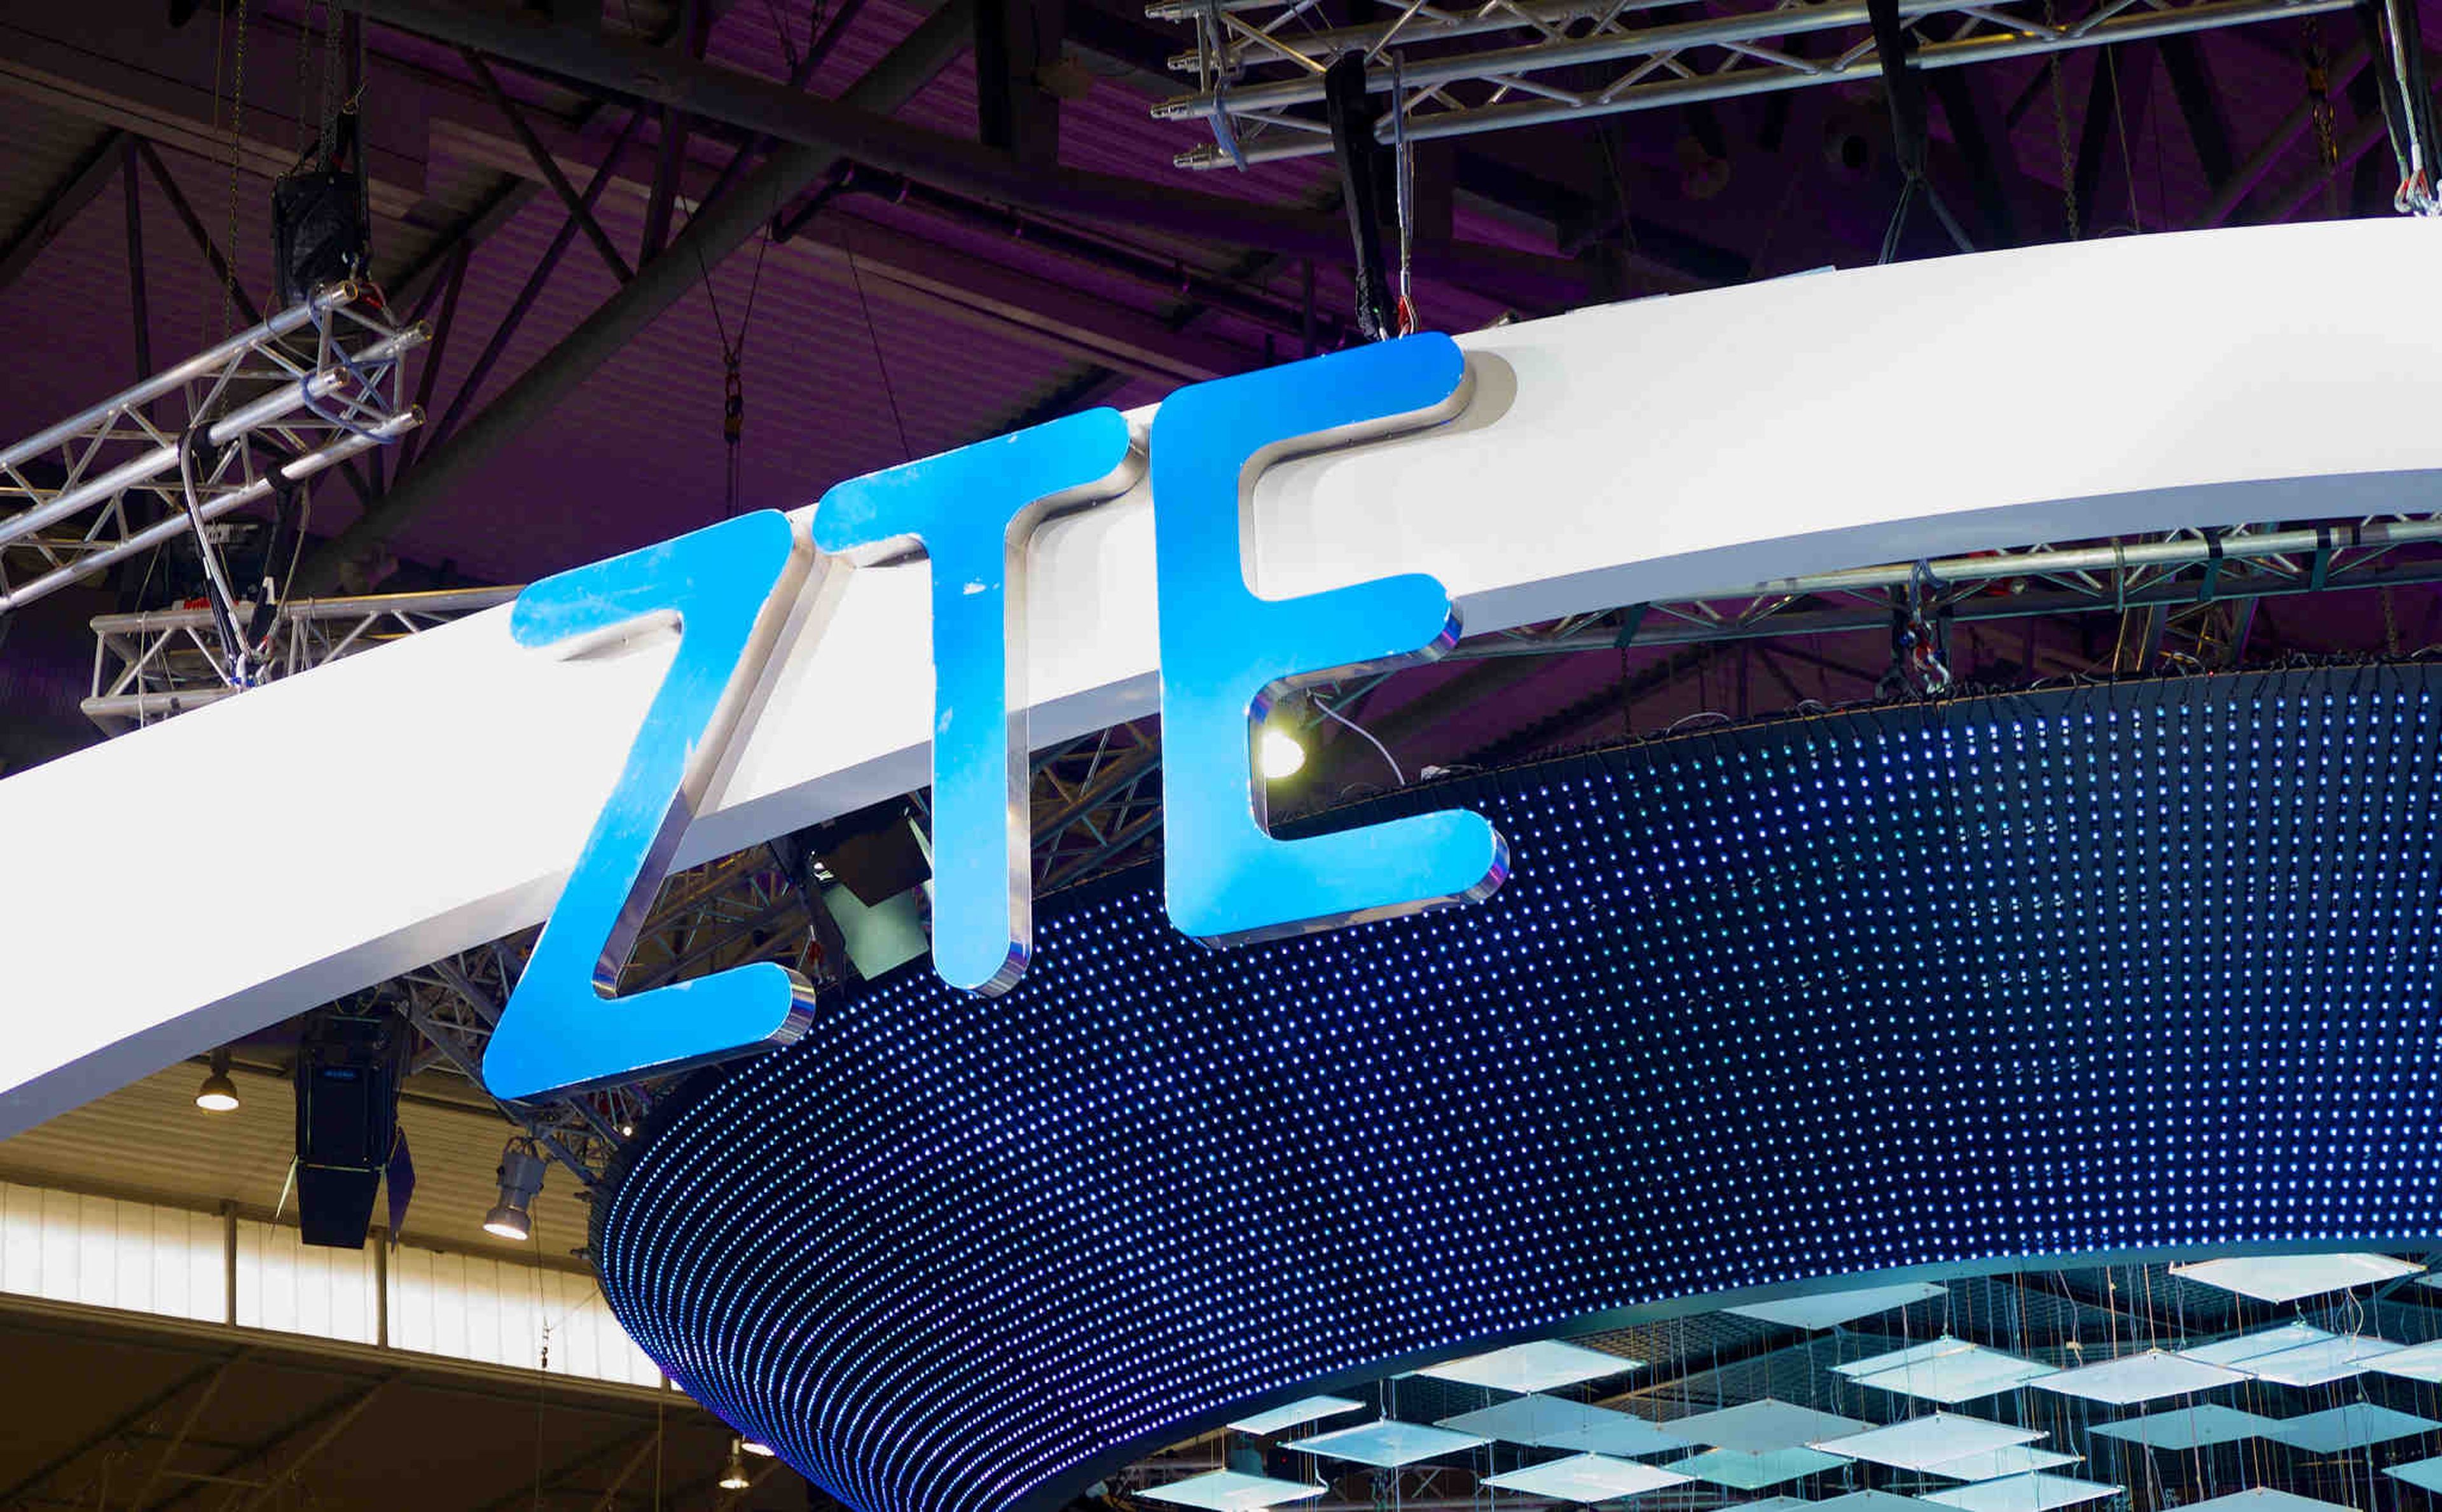 Logo de ZTE